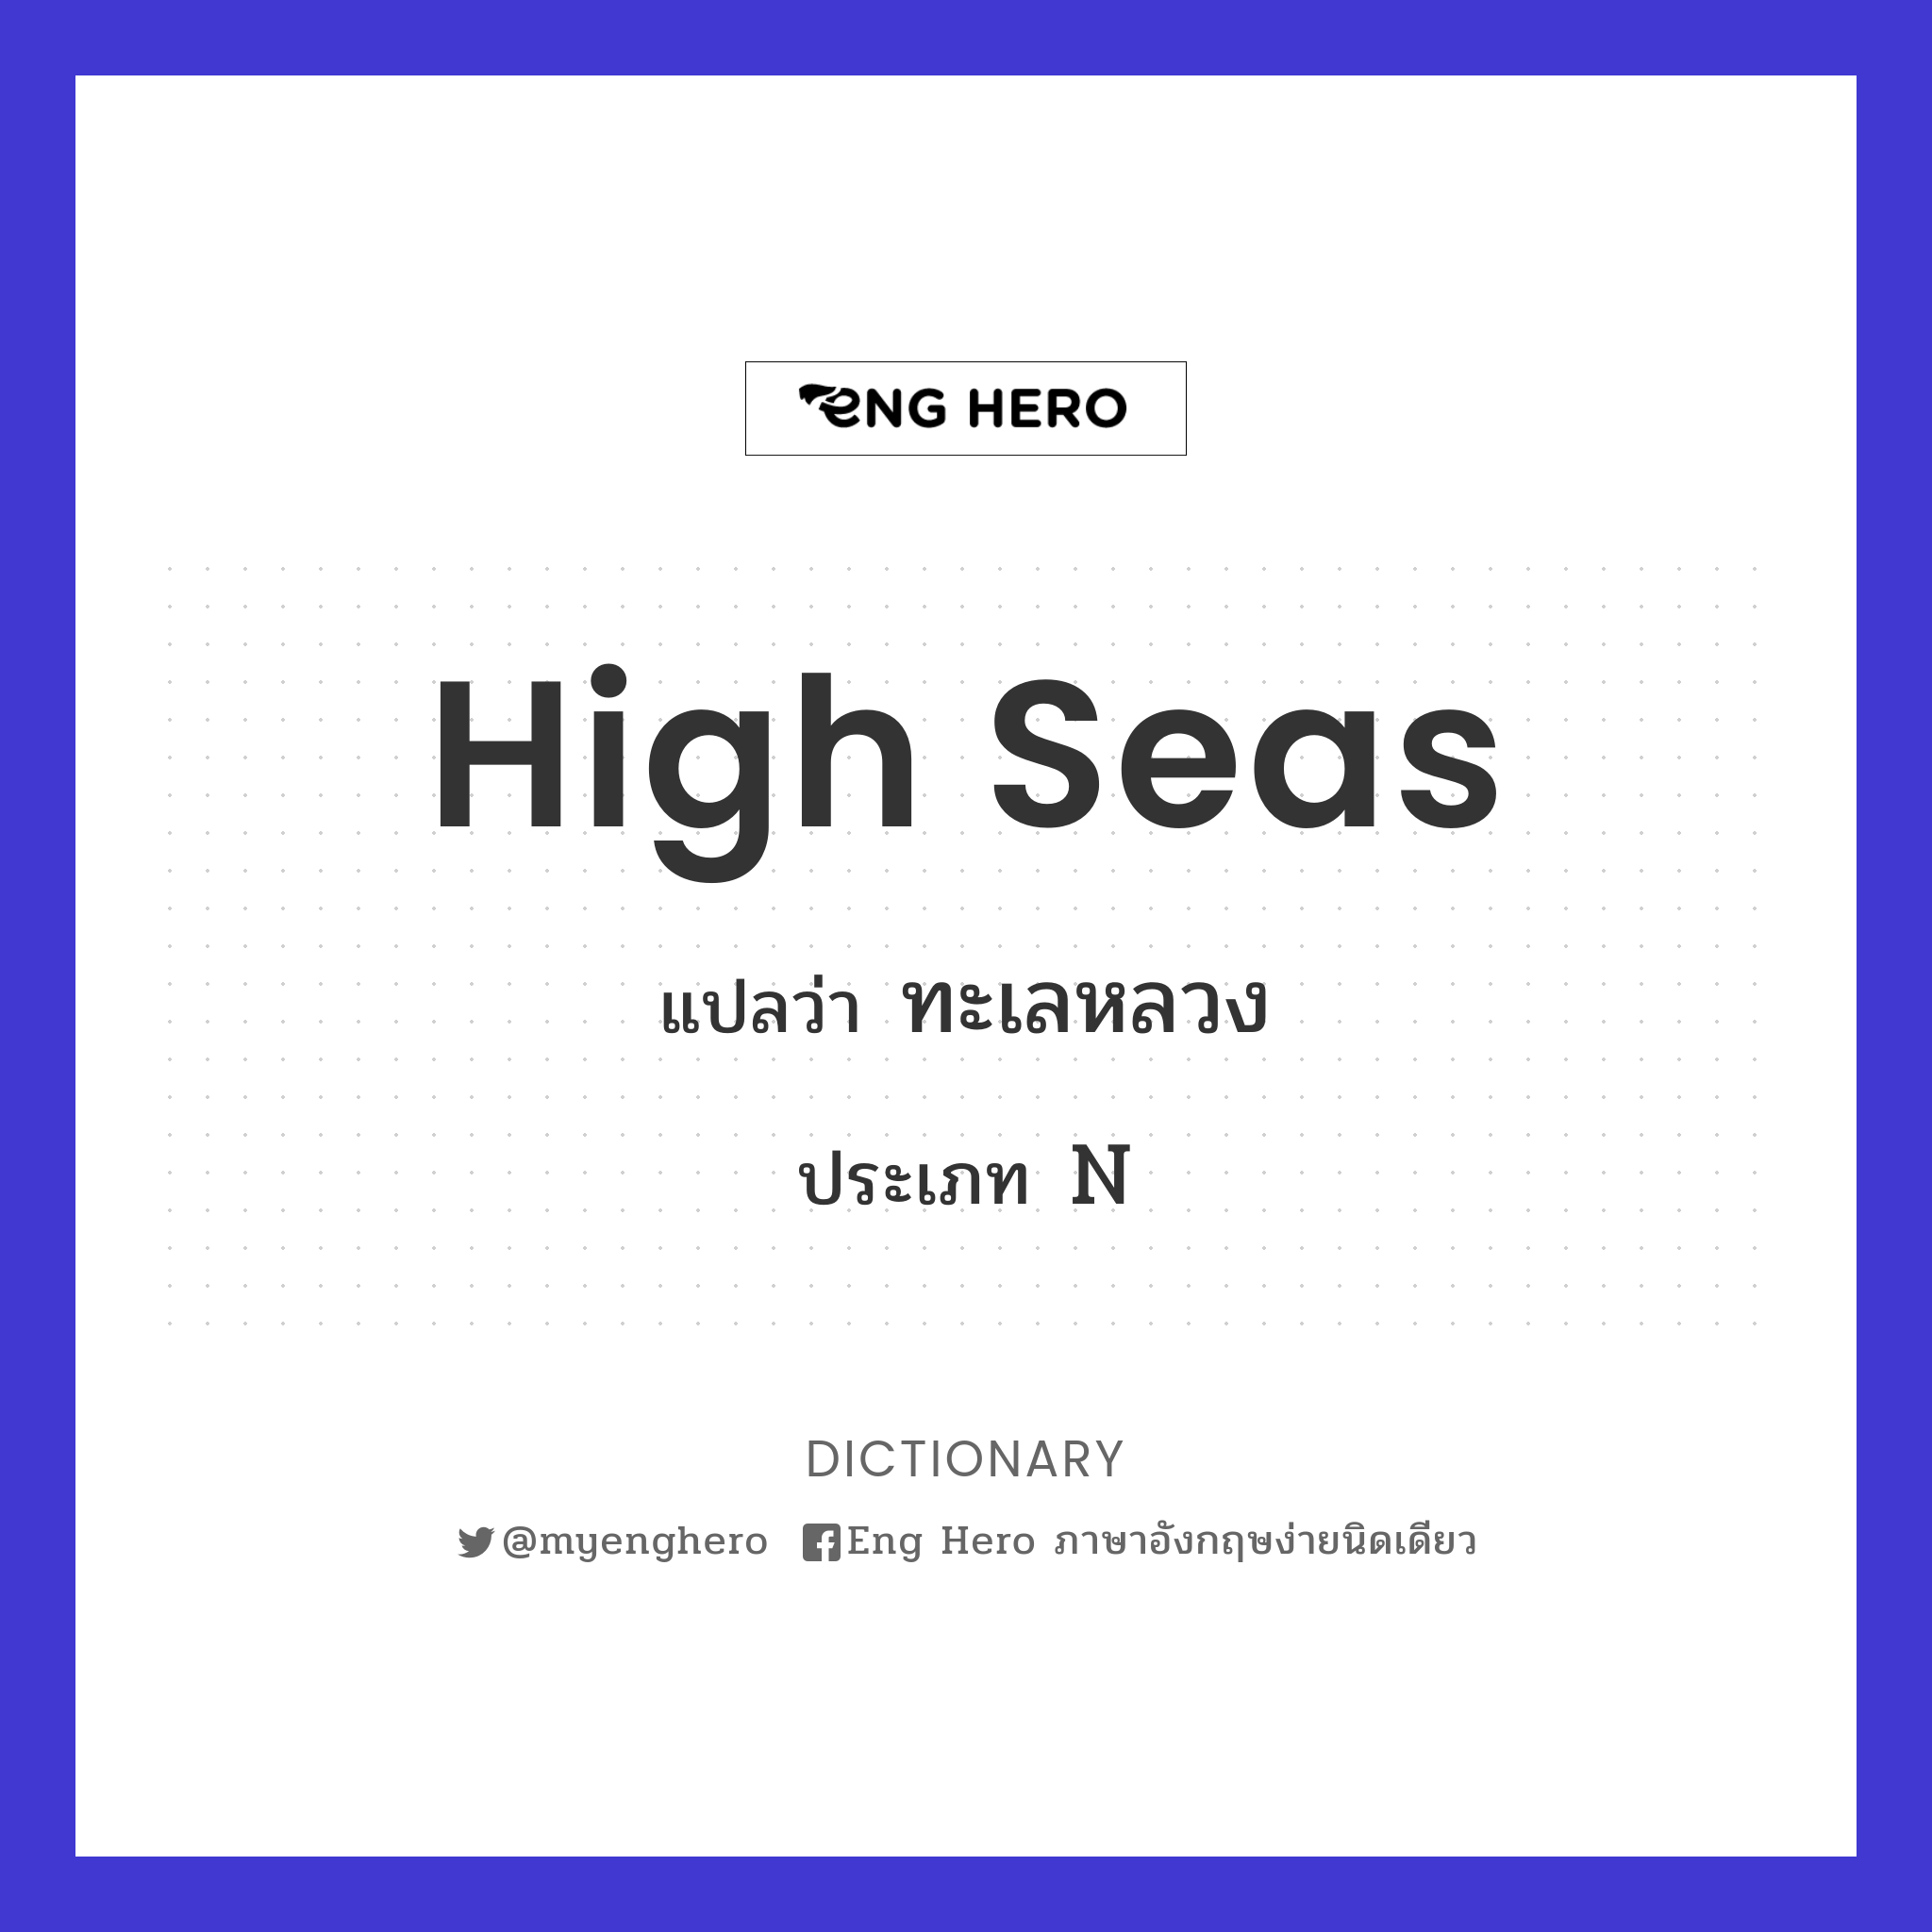 high seas